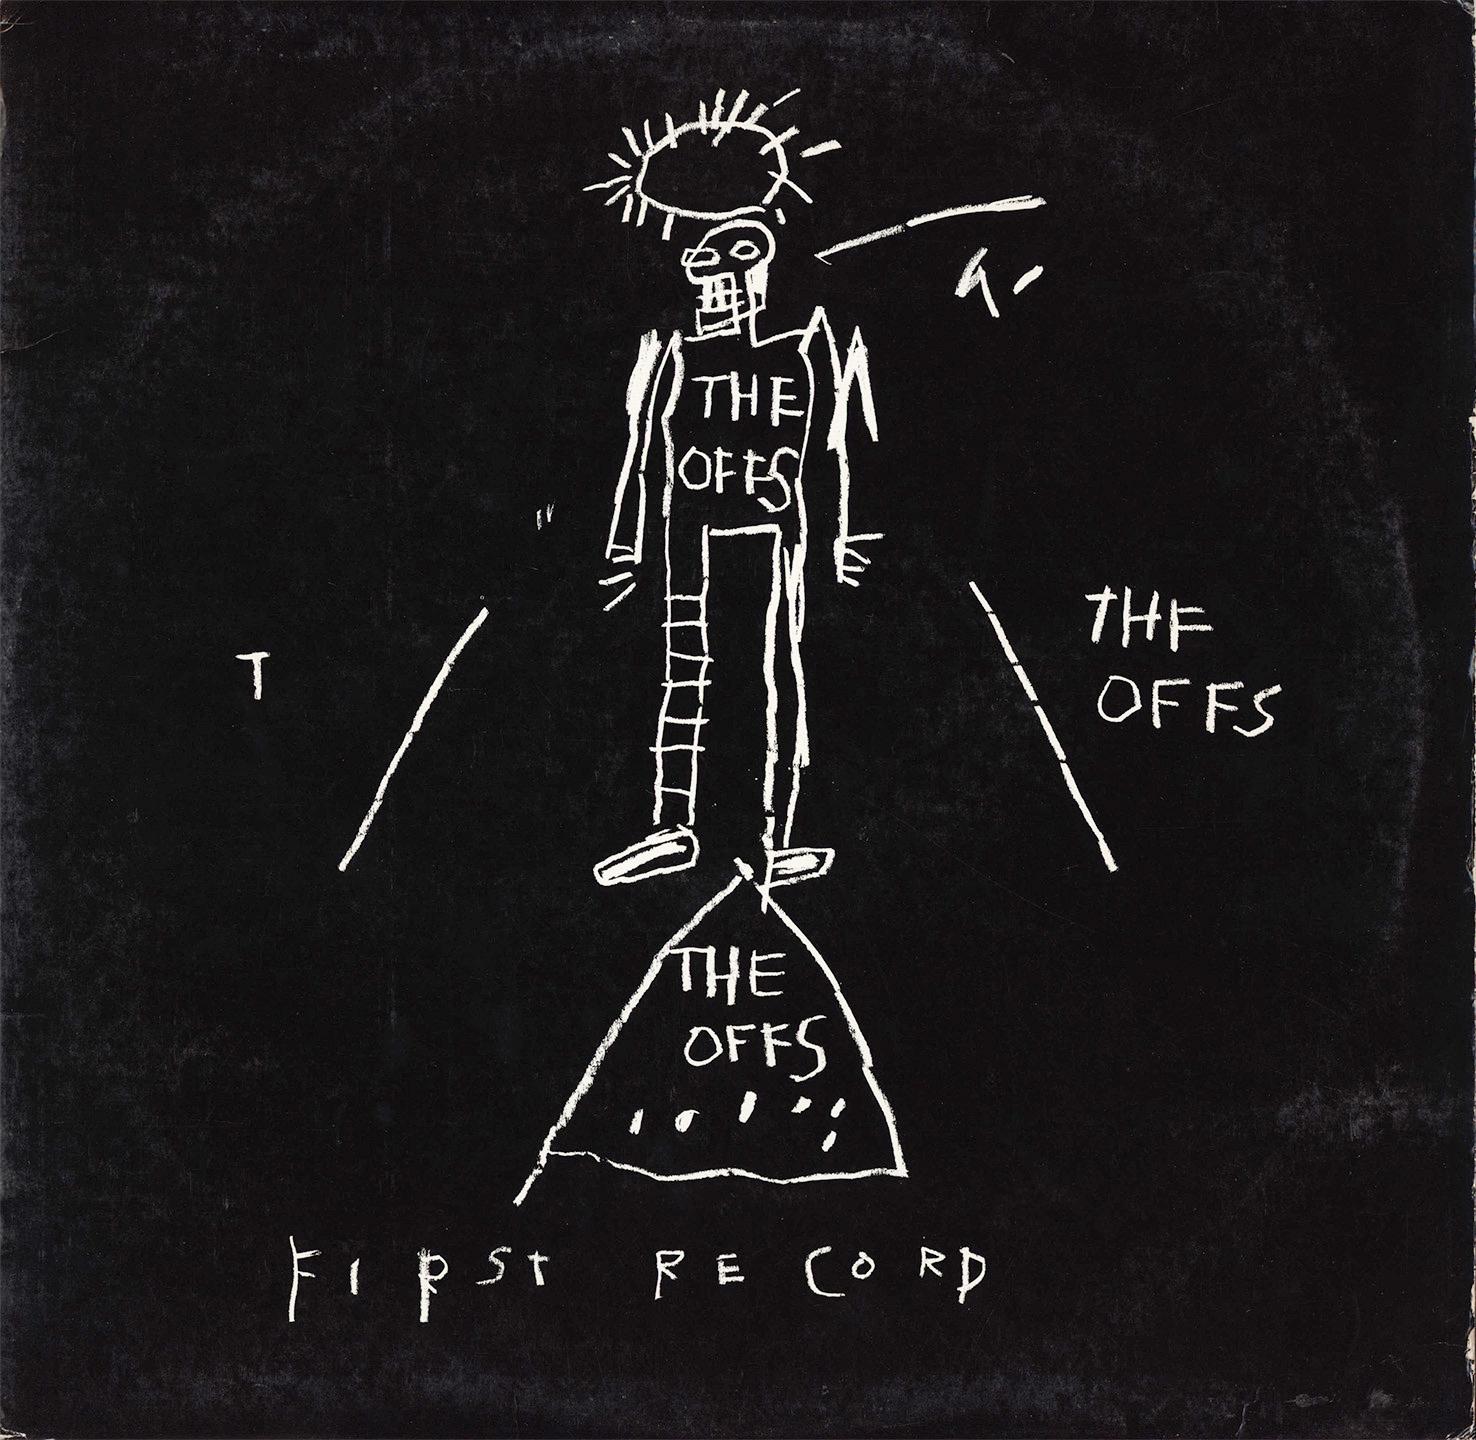 album « Basquiat The Offs » de 1984 (Basquiat record art)  - Art de Jean-Michel Basquiat